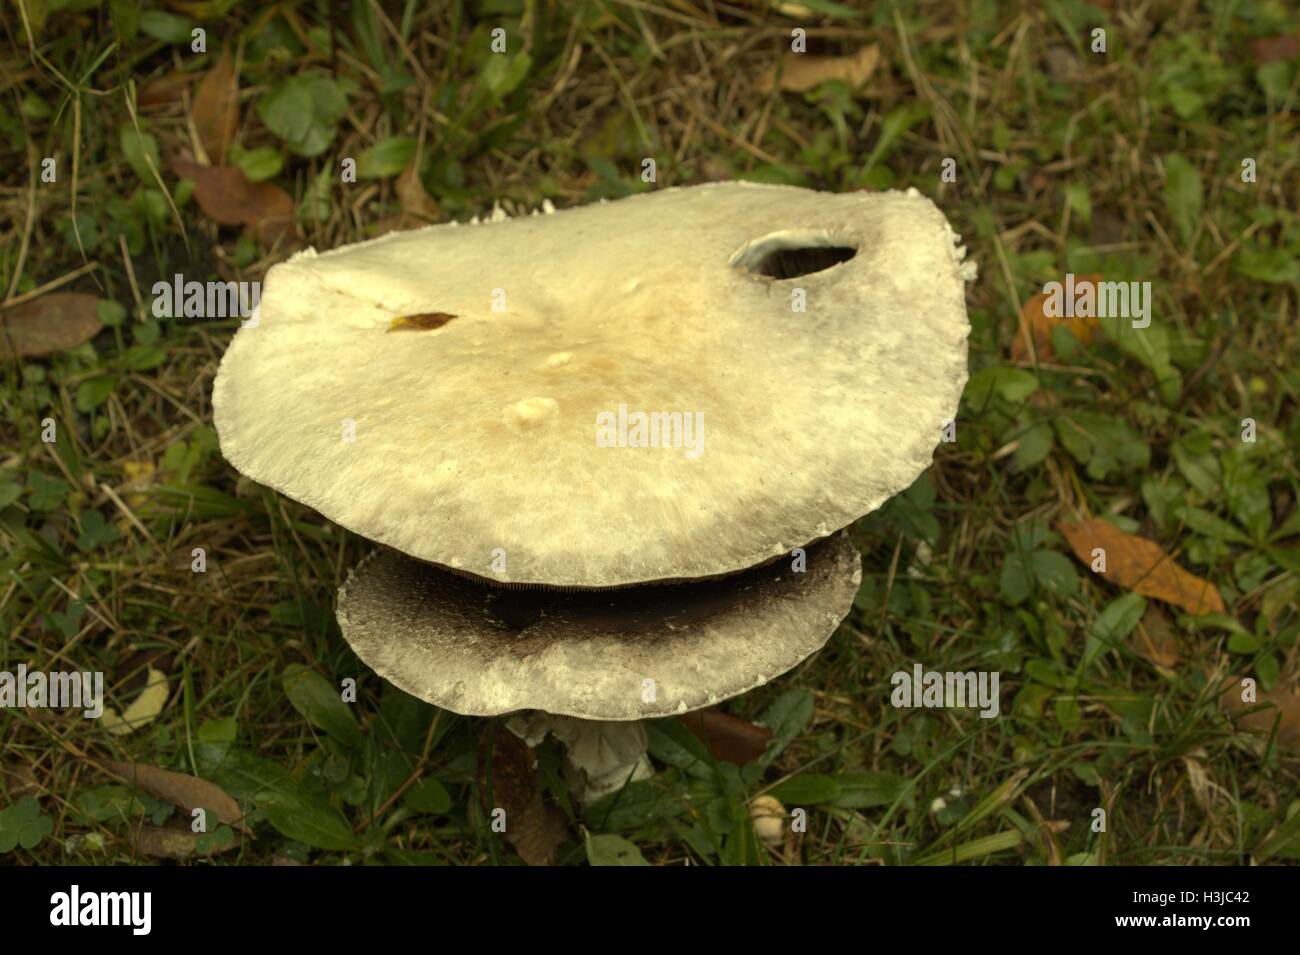 Mushroom Face Made Up Of Two Large Flat Mushrooms Stock Photo